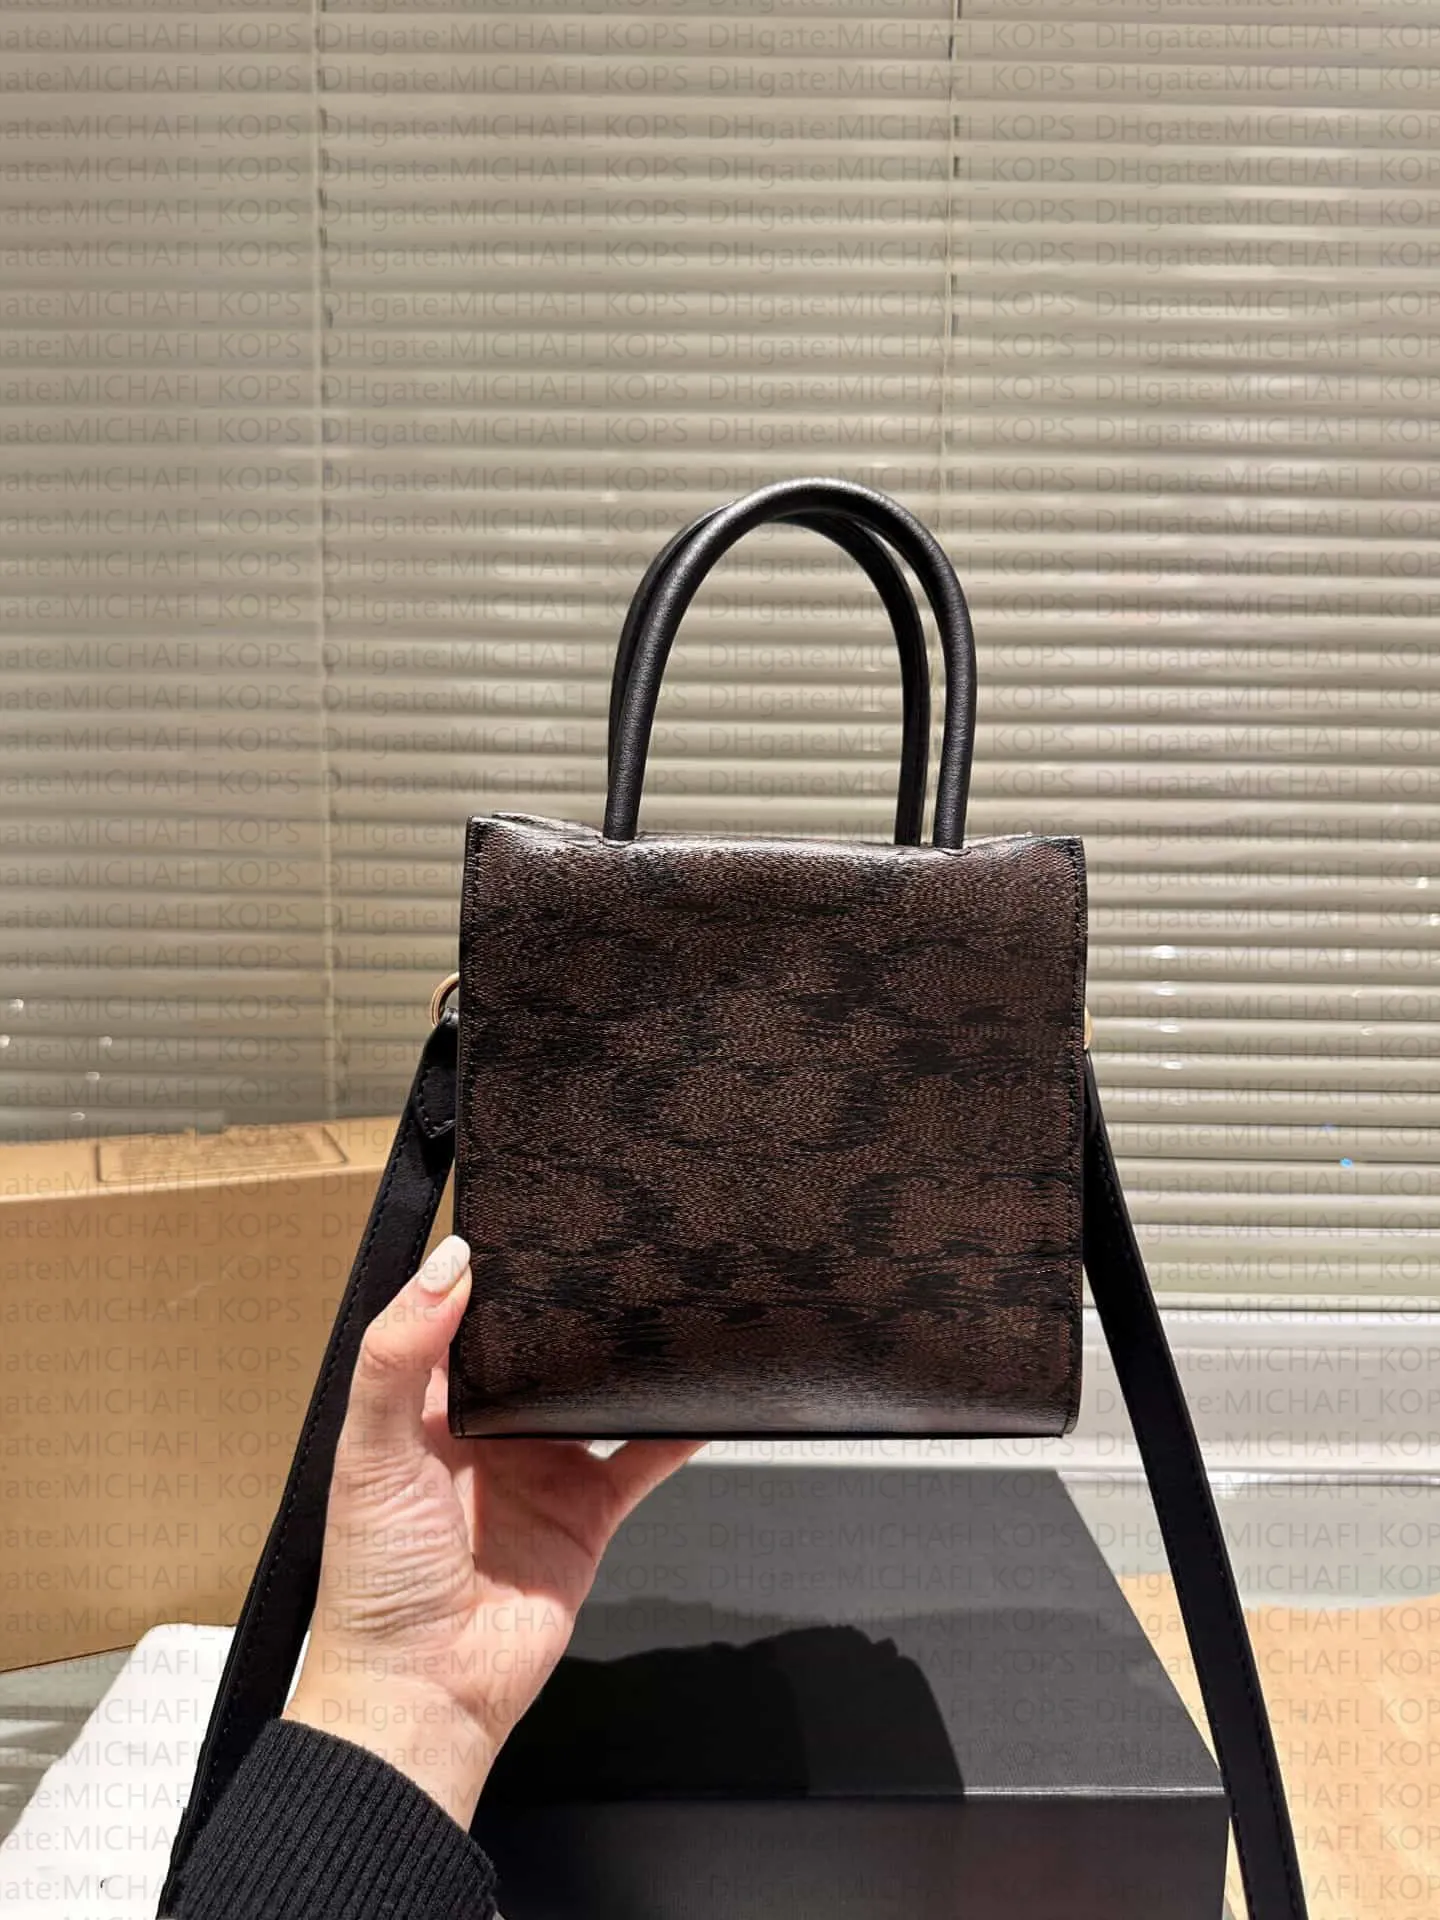 MINICALLY Qin Score Bag Leather Handle Women Crossbody Bag Metal Letter Commuter Designer Bag